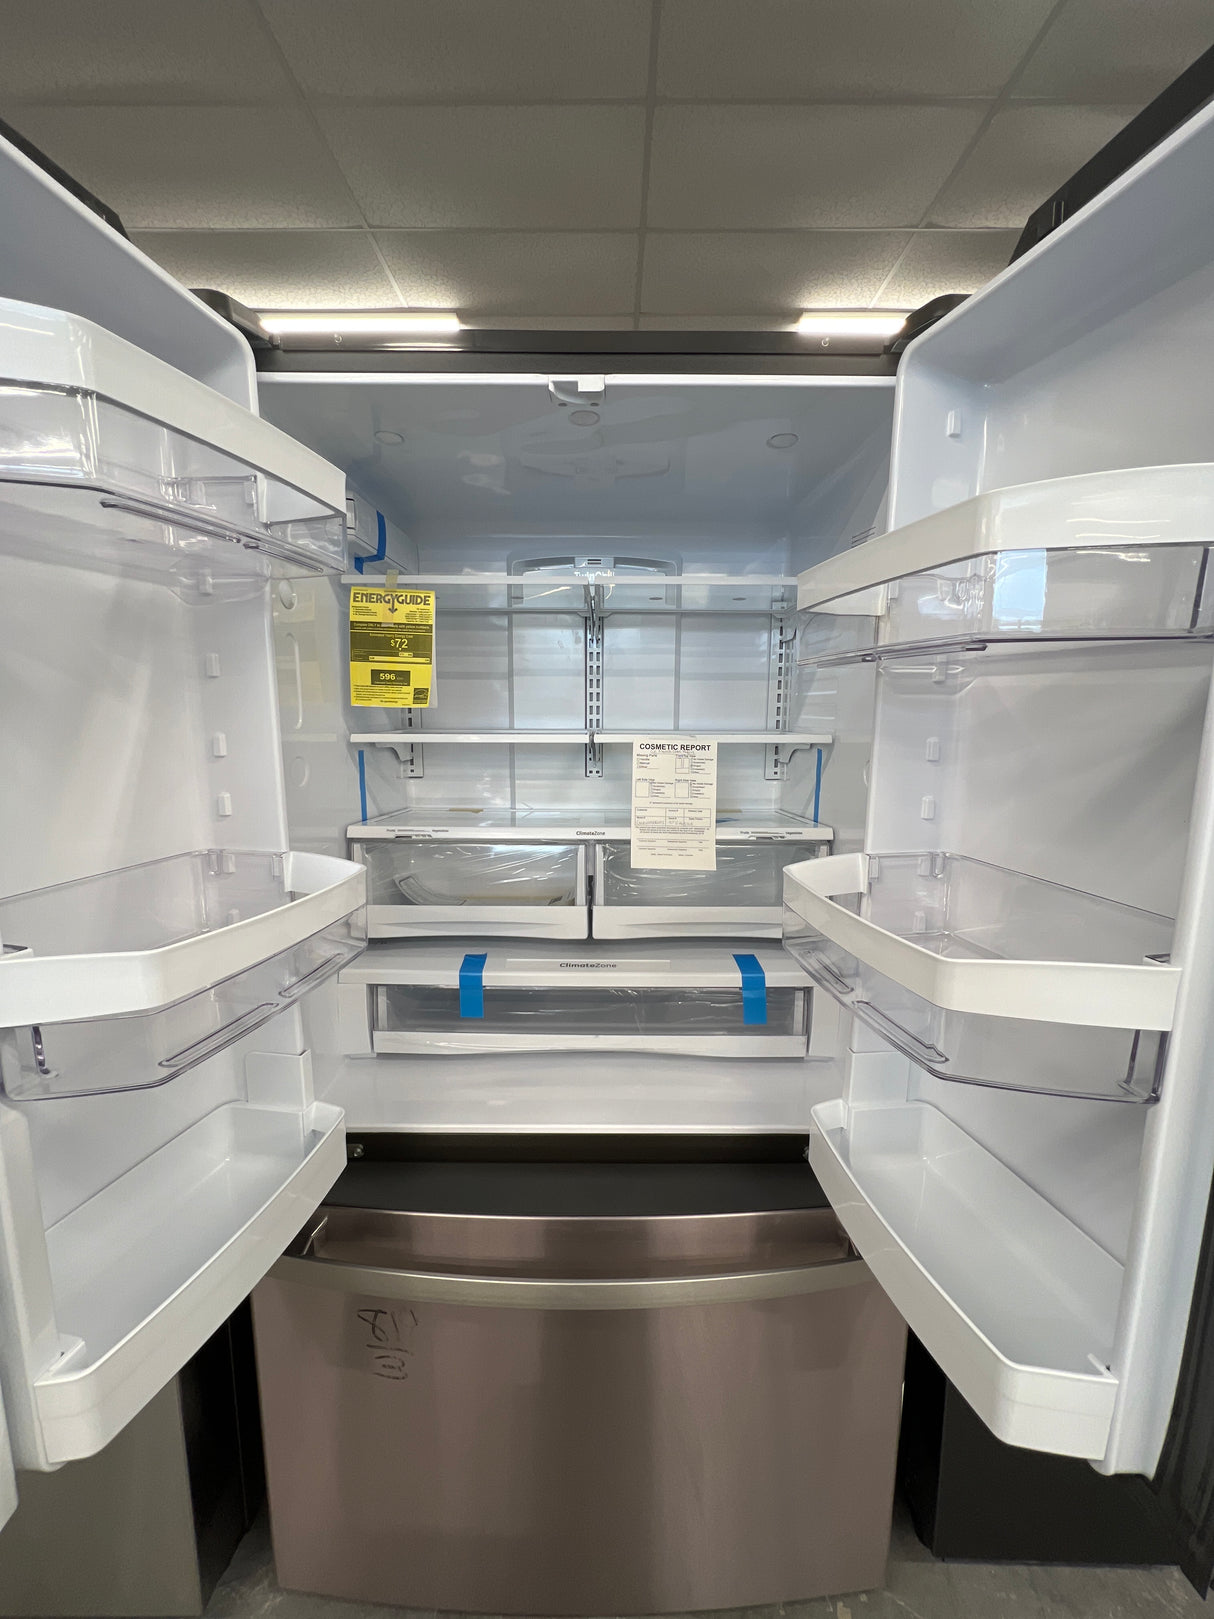 GE Profile Refrigerators - Counter Depth French Door 23.1 Cu Ft - PWE23KYNFS